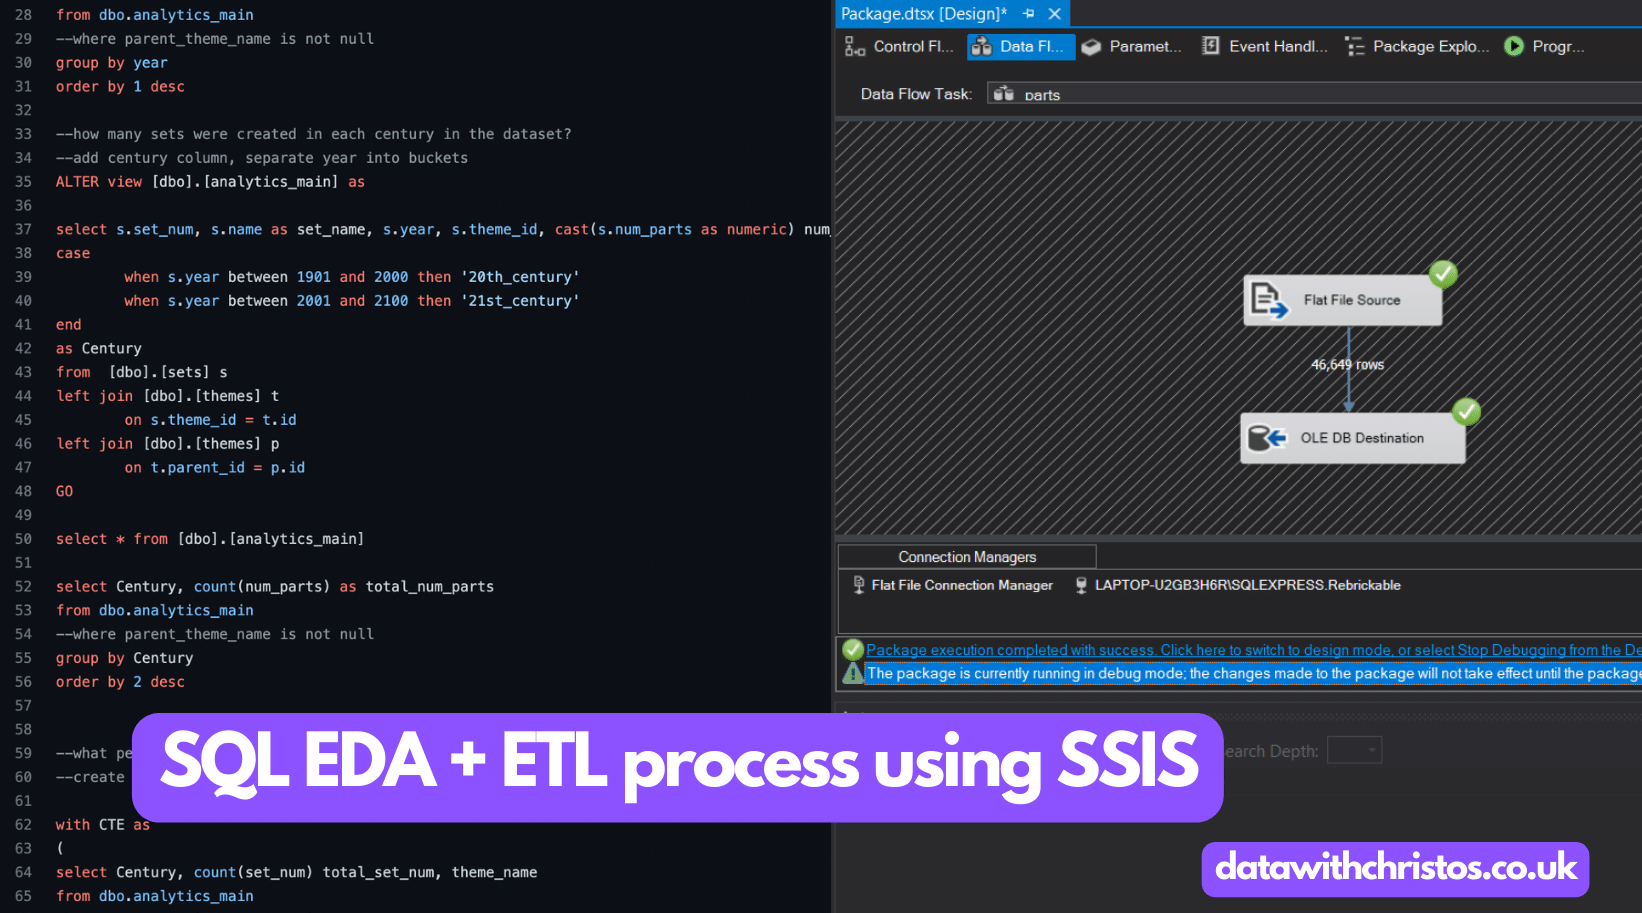 SQL EDA + ETL Process